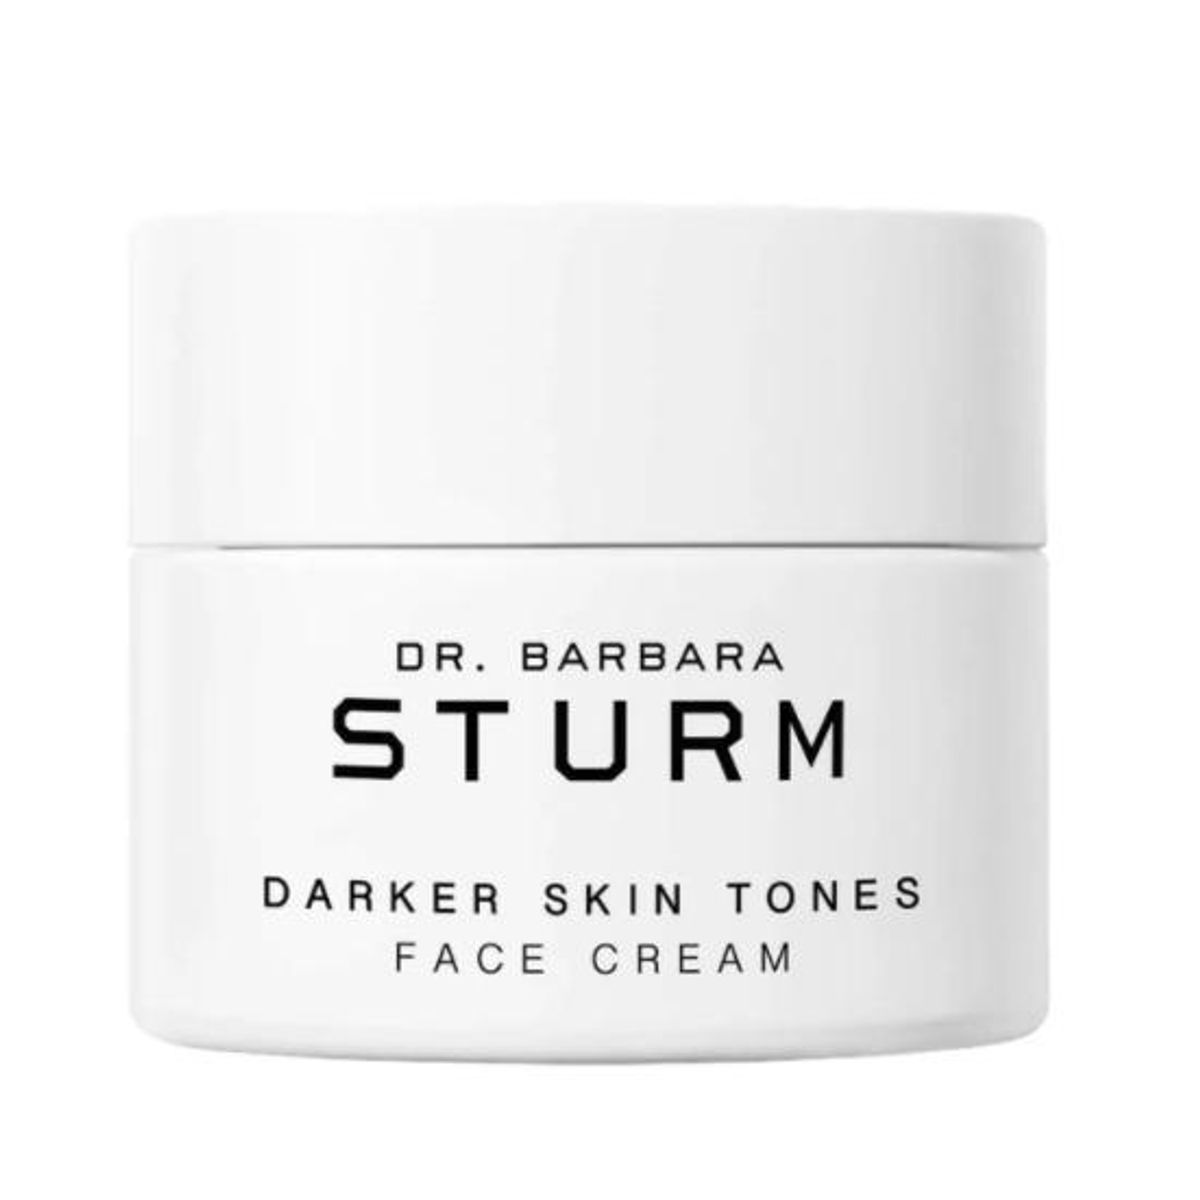 dr barbara sturm darker skin tones face cram